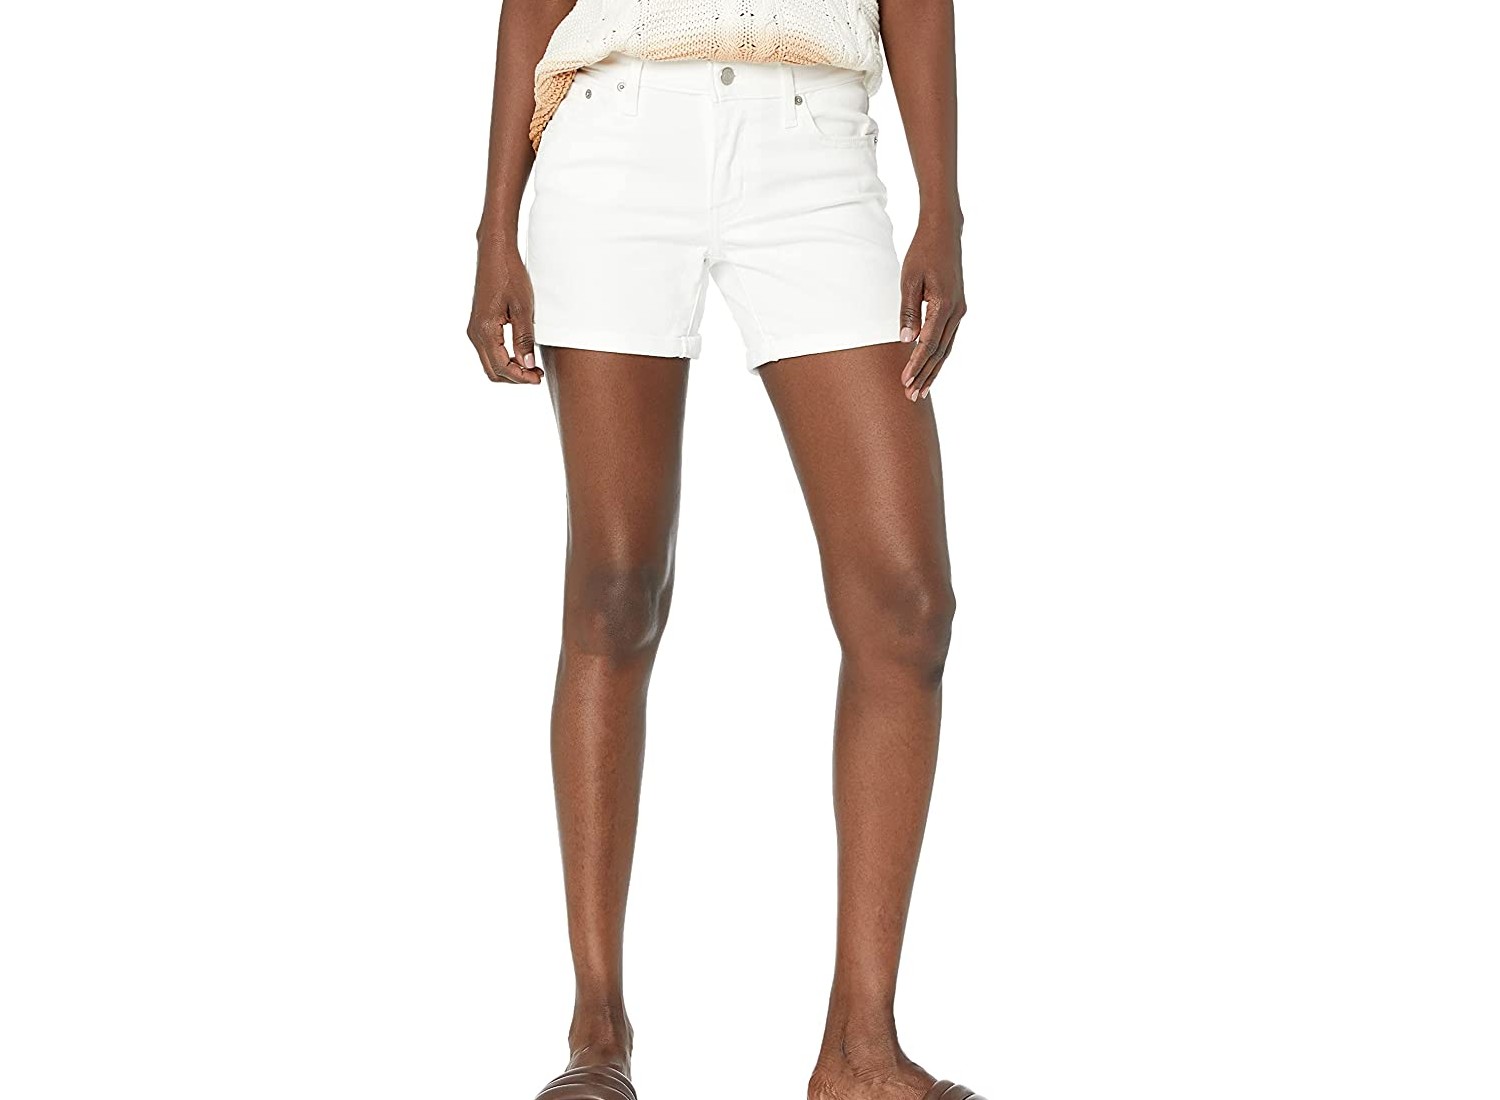 A pair of white, denim shorts.